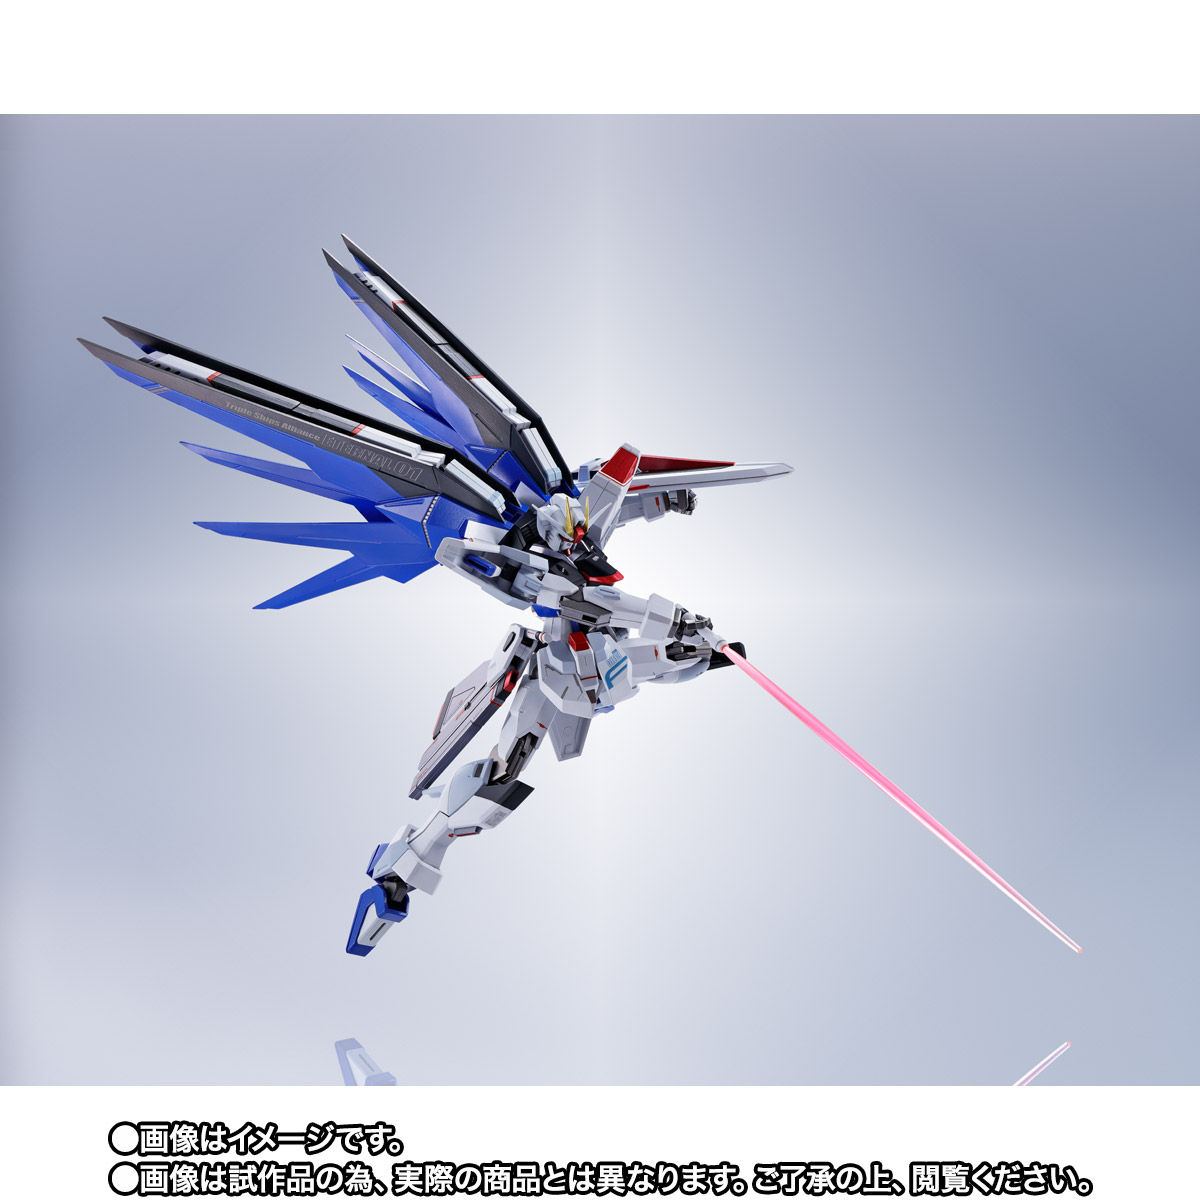 Metal Robot Spirits(Side MS) ZGMF-X10A Freedom Gundam